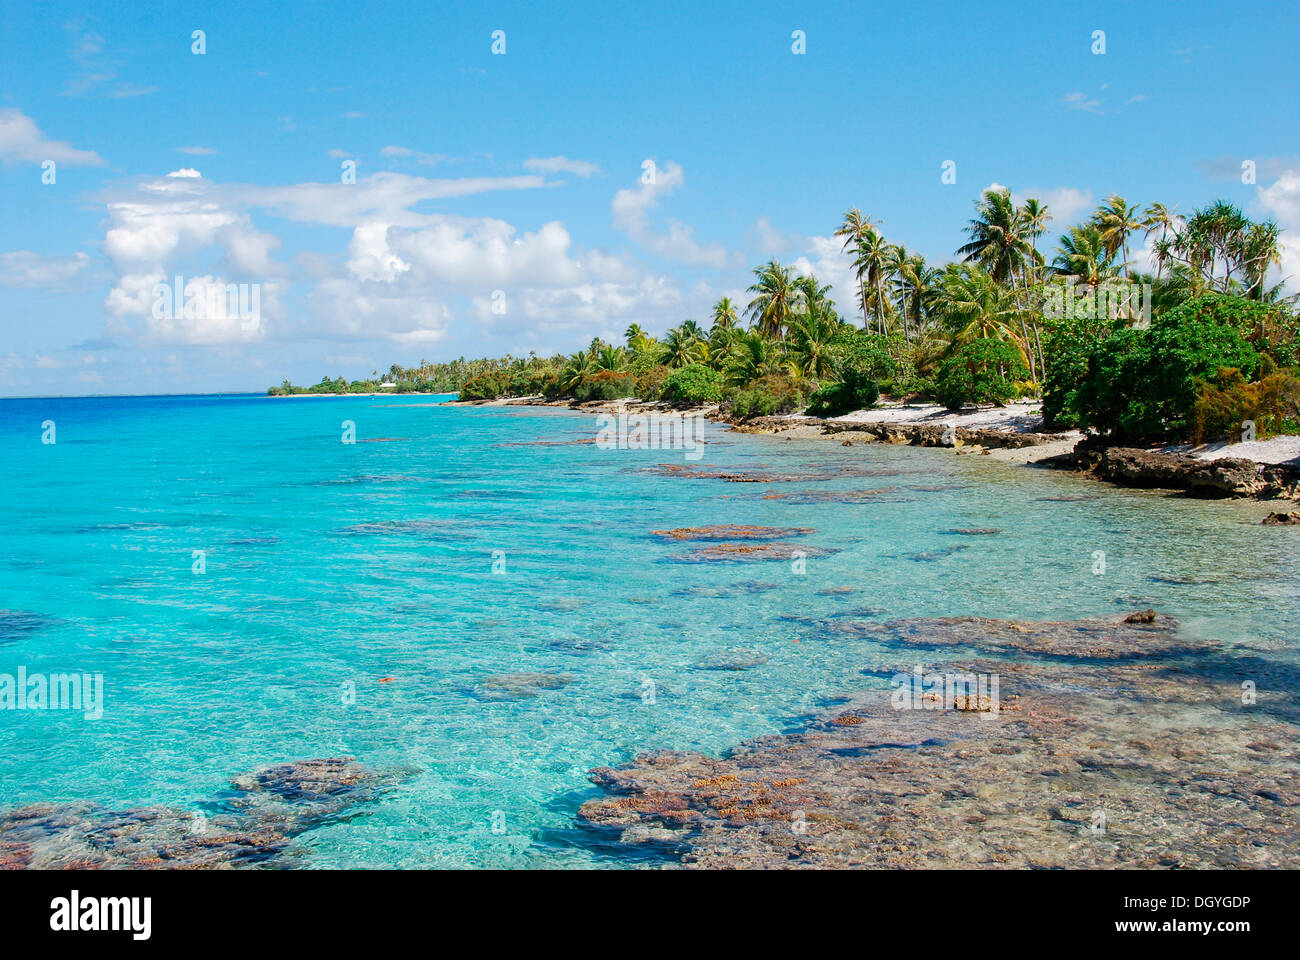 Atollo di Fakarava, spiaggia deserta, palme, mare turchese, Polinesia francese, Arcipelago Tuamotu, Oceano Pacifico Foto Stock